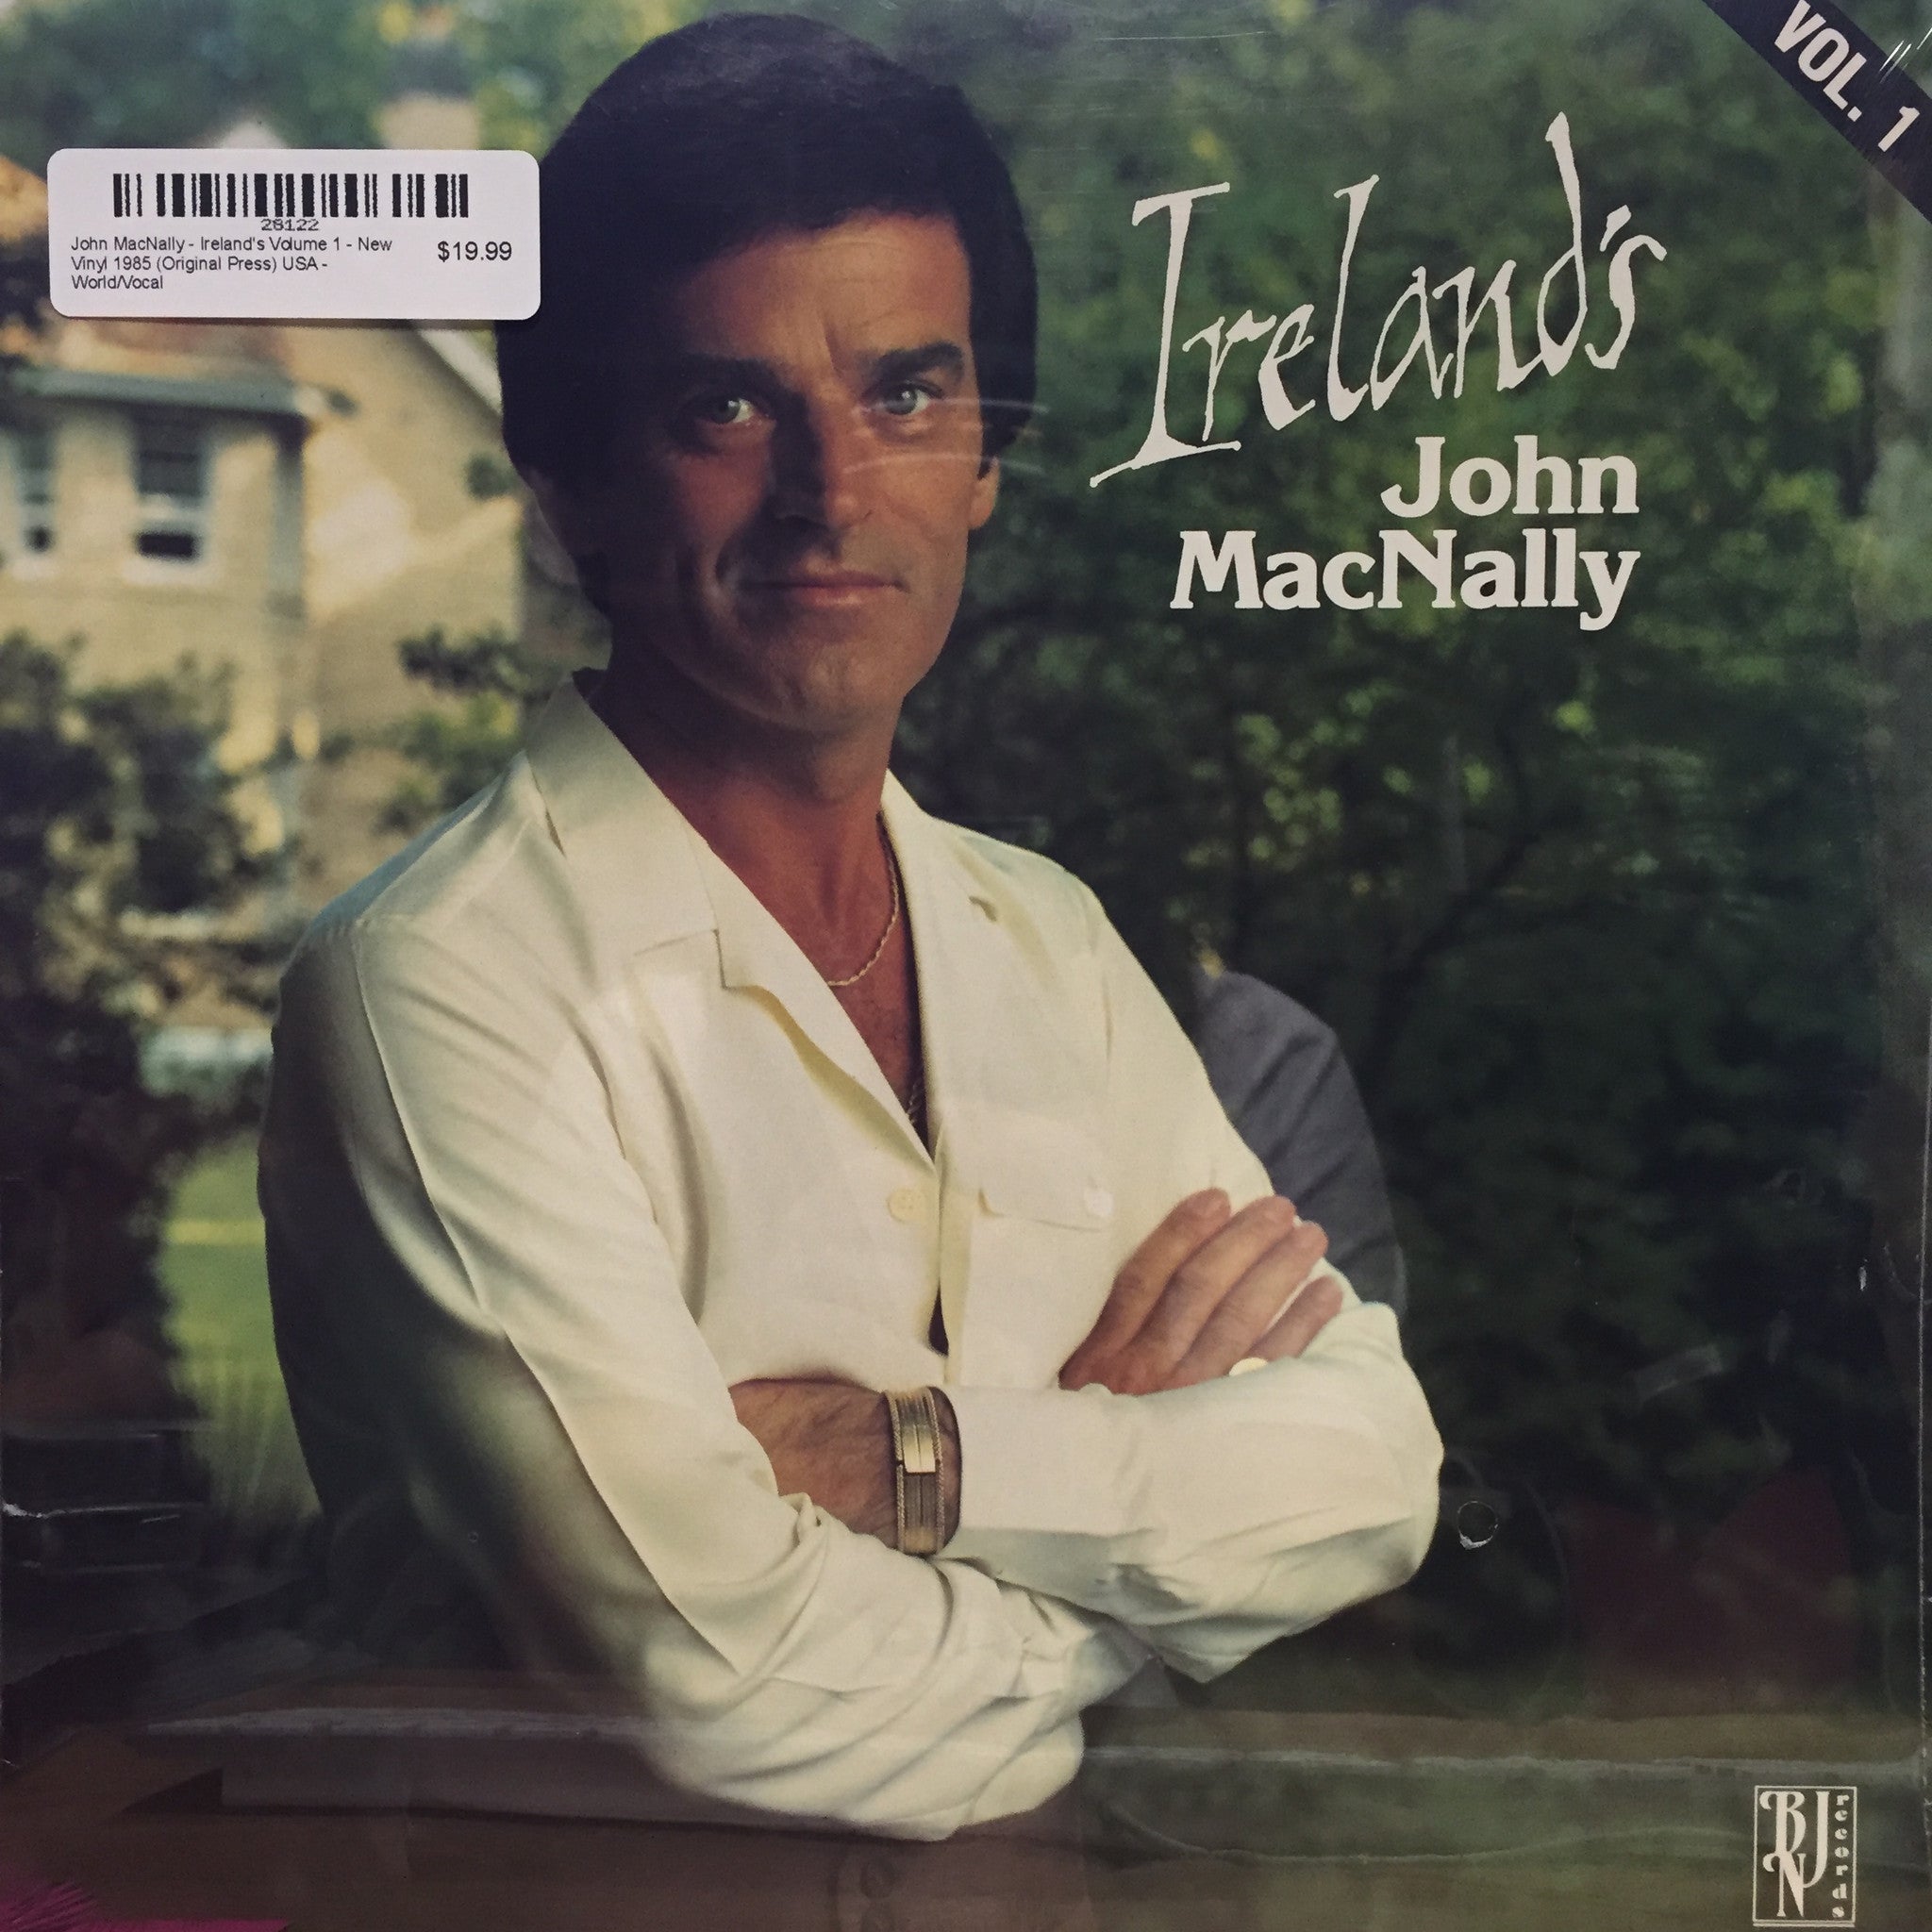 John MacNally - Ireland's Volume 1 - New Vinyl Record 1985 (Original Press) USA - World/Vocal